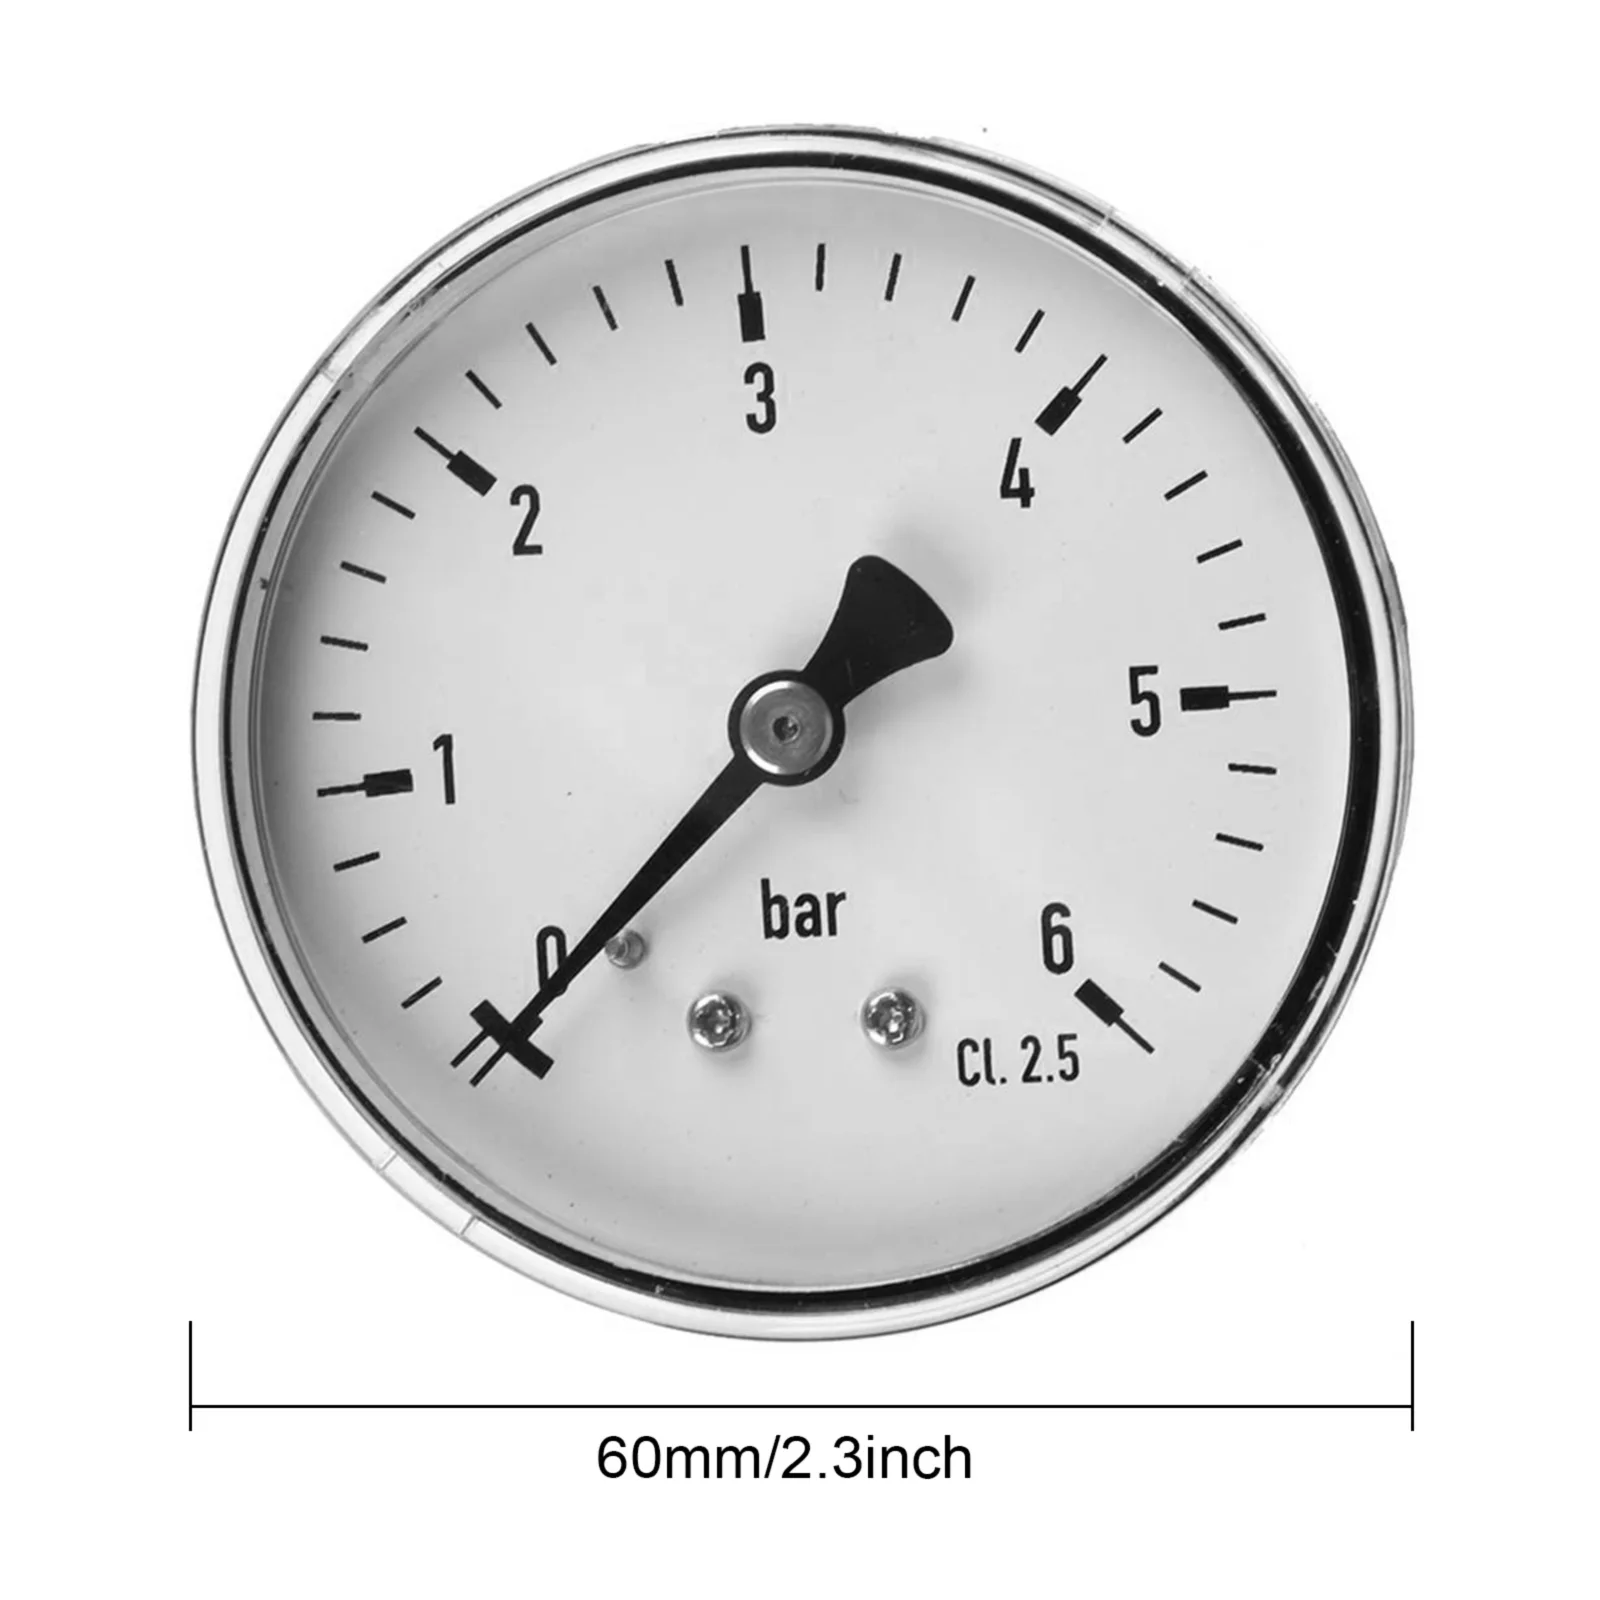 

1 4 Male NPT Thread Mount 0-6bar Pressure Gauge Manometer Dial Plate for Fuel Air Oil Water Pressure Measuring Tools